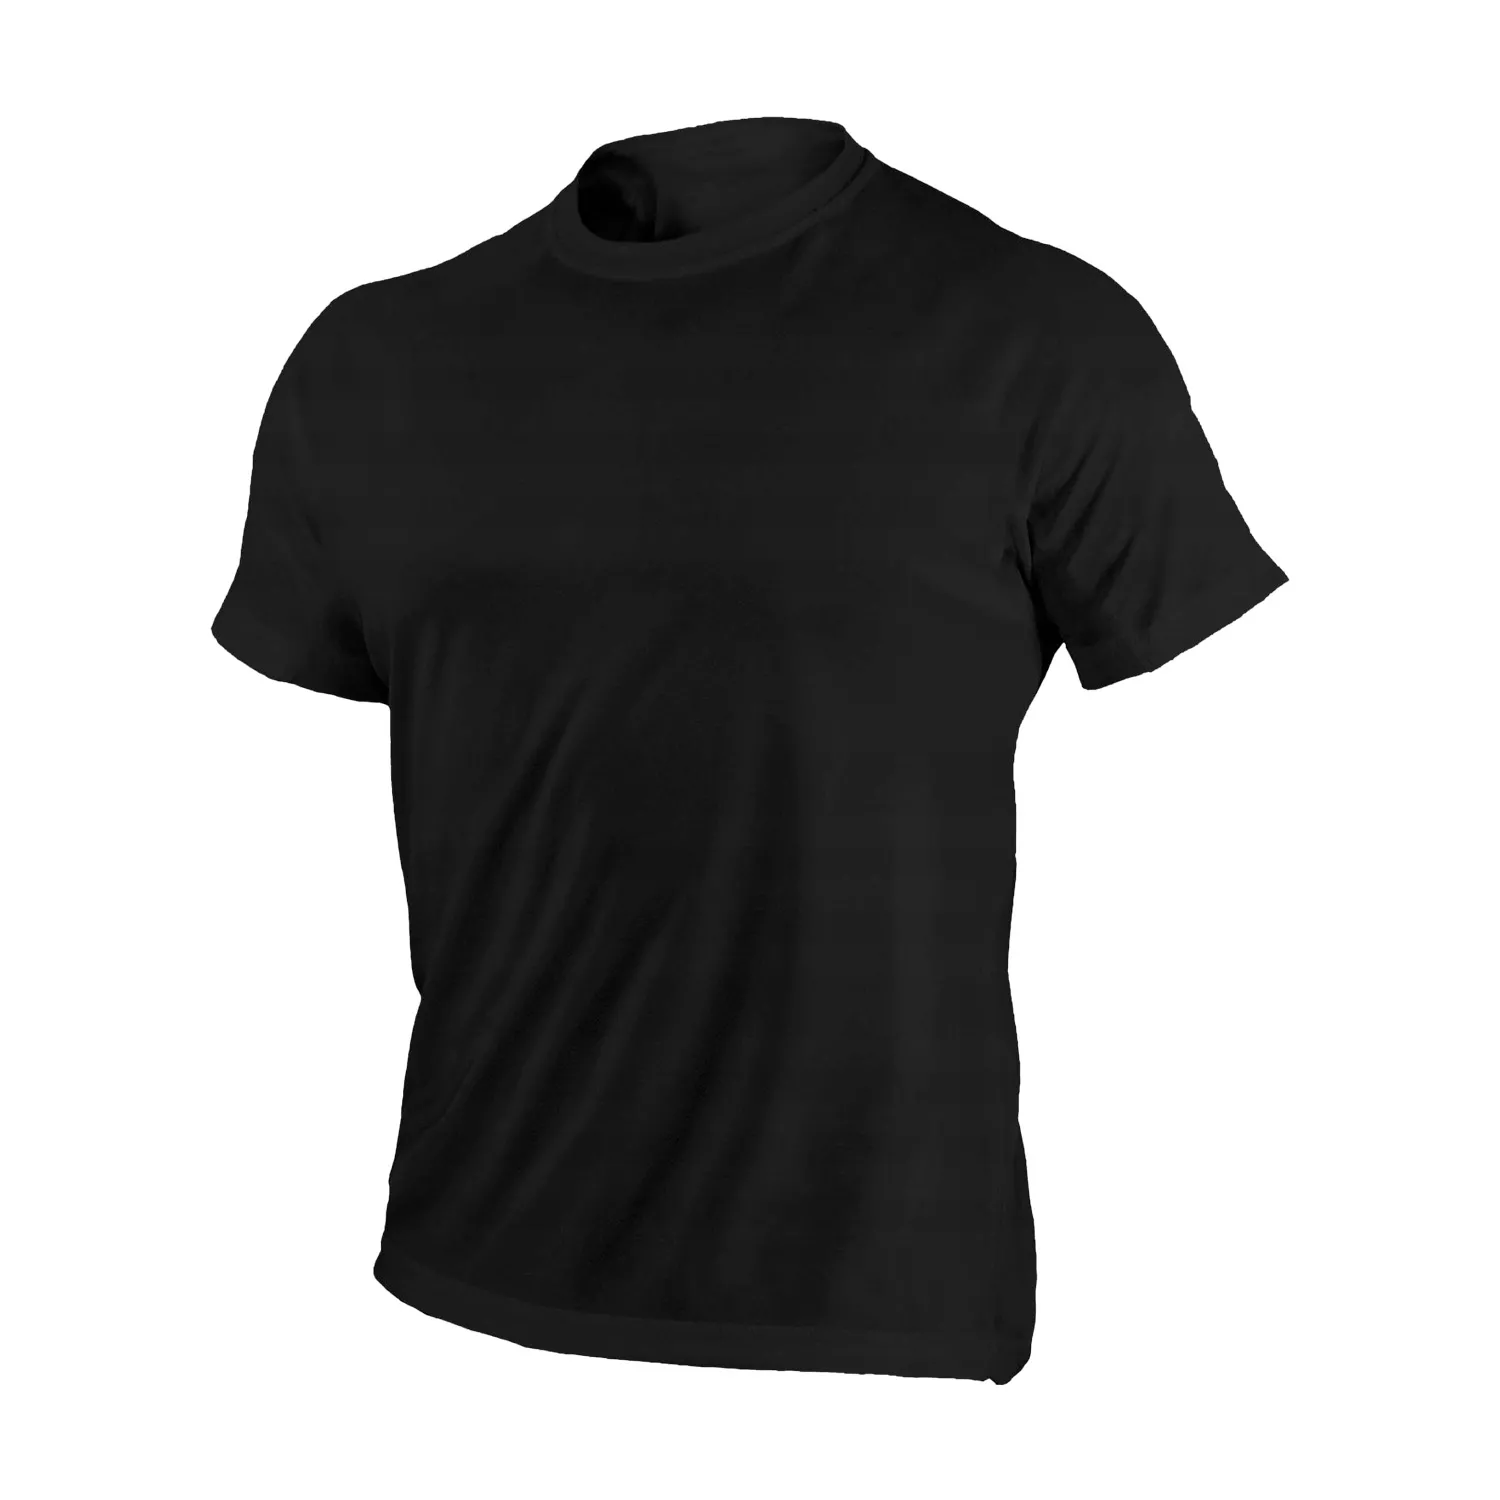 Koszulka T-shirt Bono czarna rozmiar M 